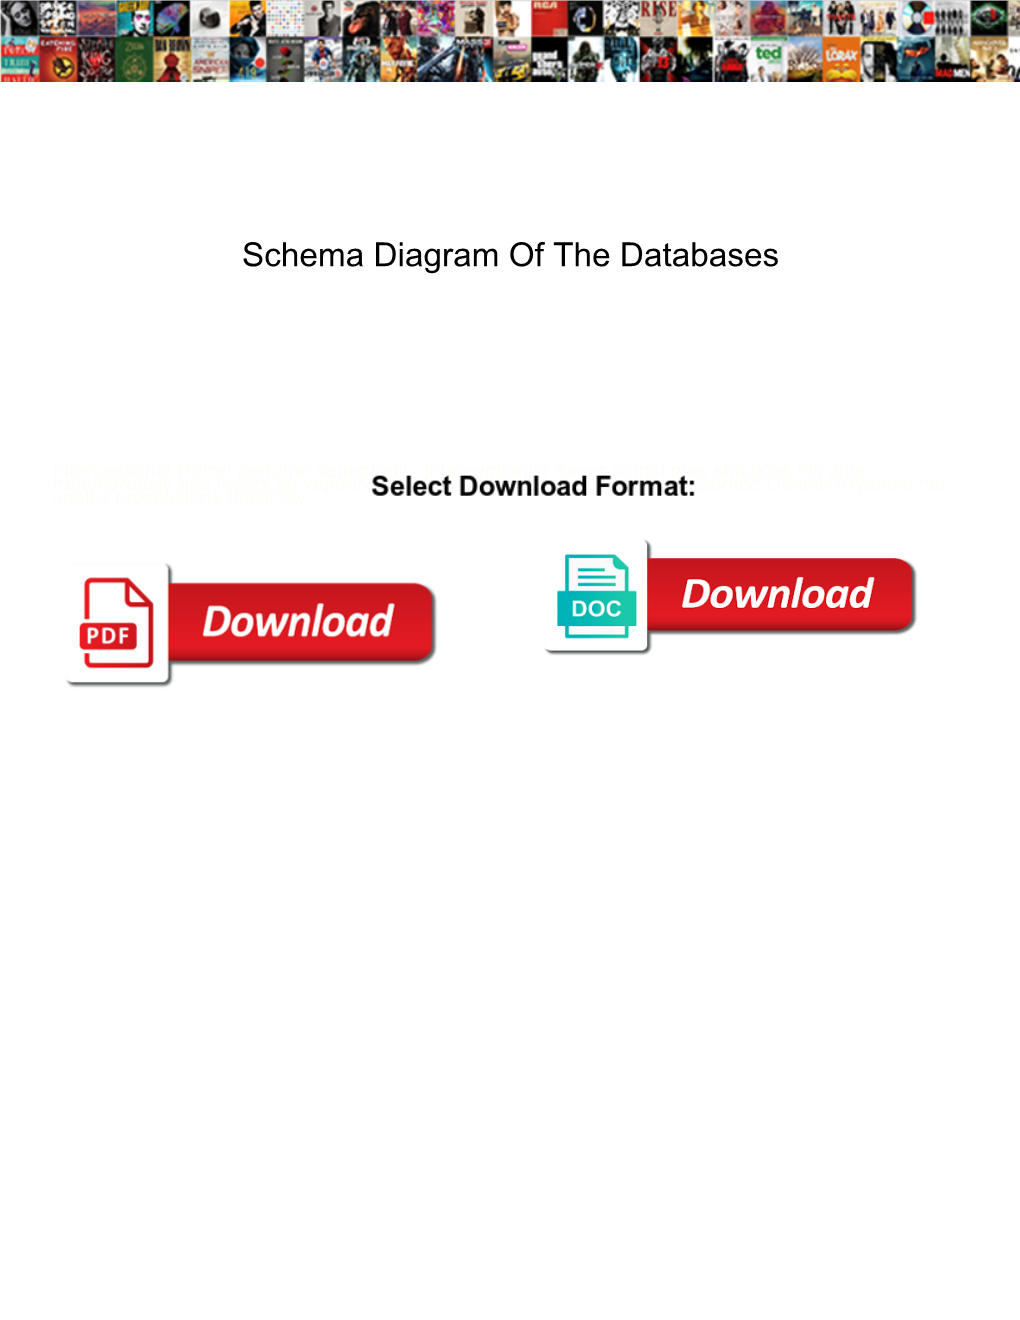 Schema Diagram of the Databases